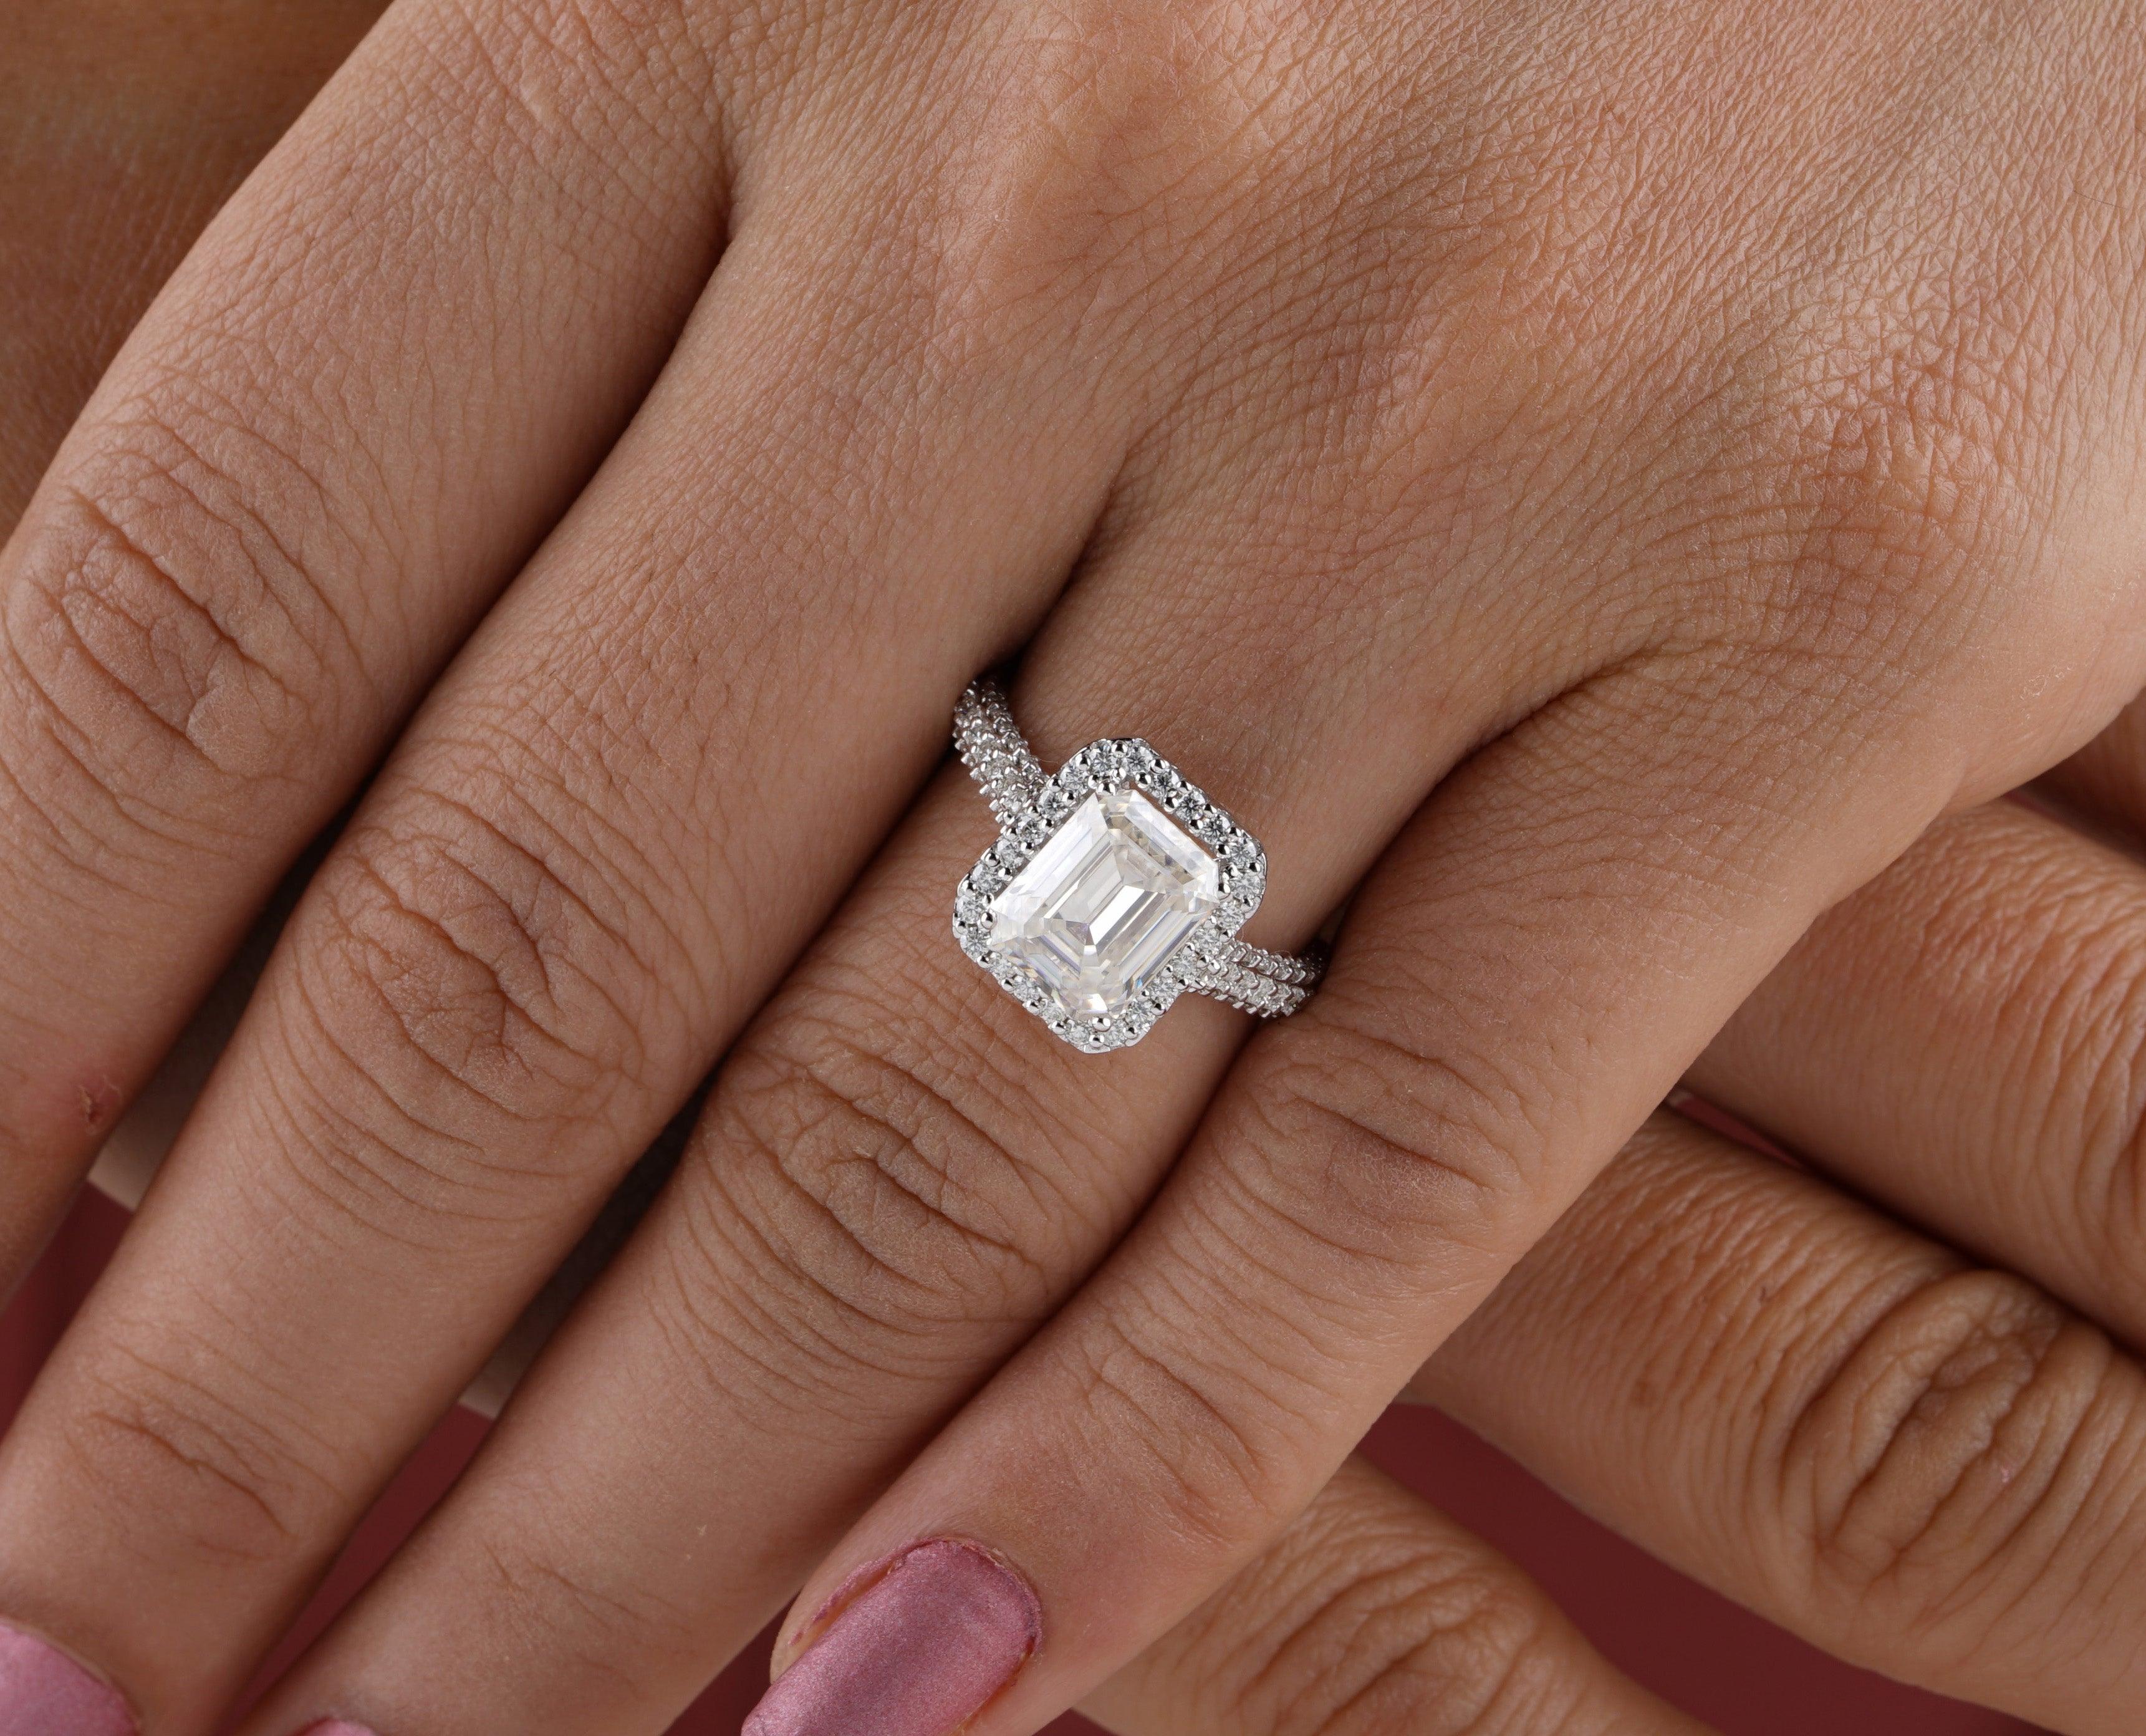 2.50CT Emerald Cut Moissanite Hidden Halo Engagement Ring - Eurekalook